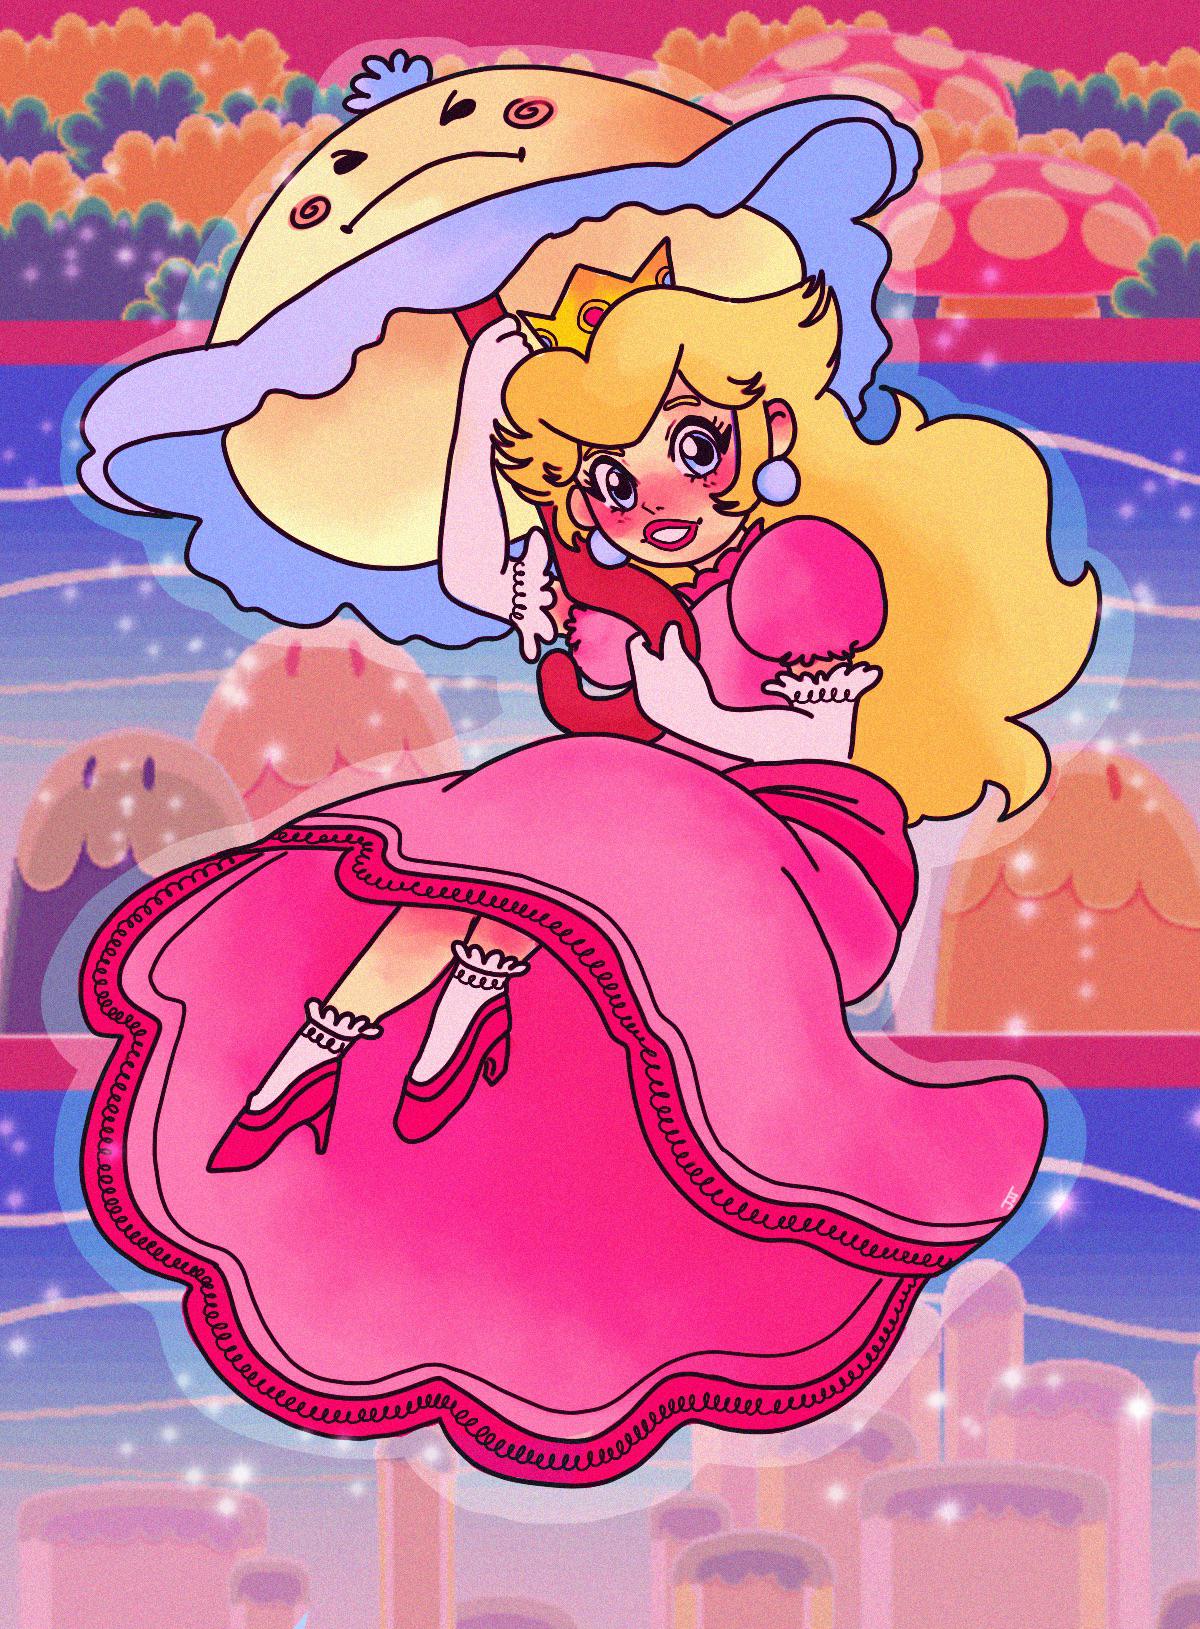 Super Princess Peach!